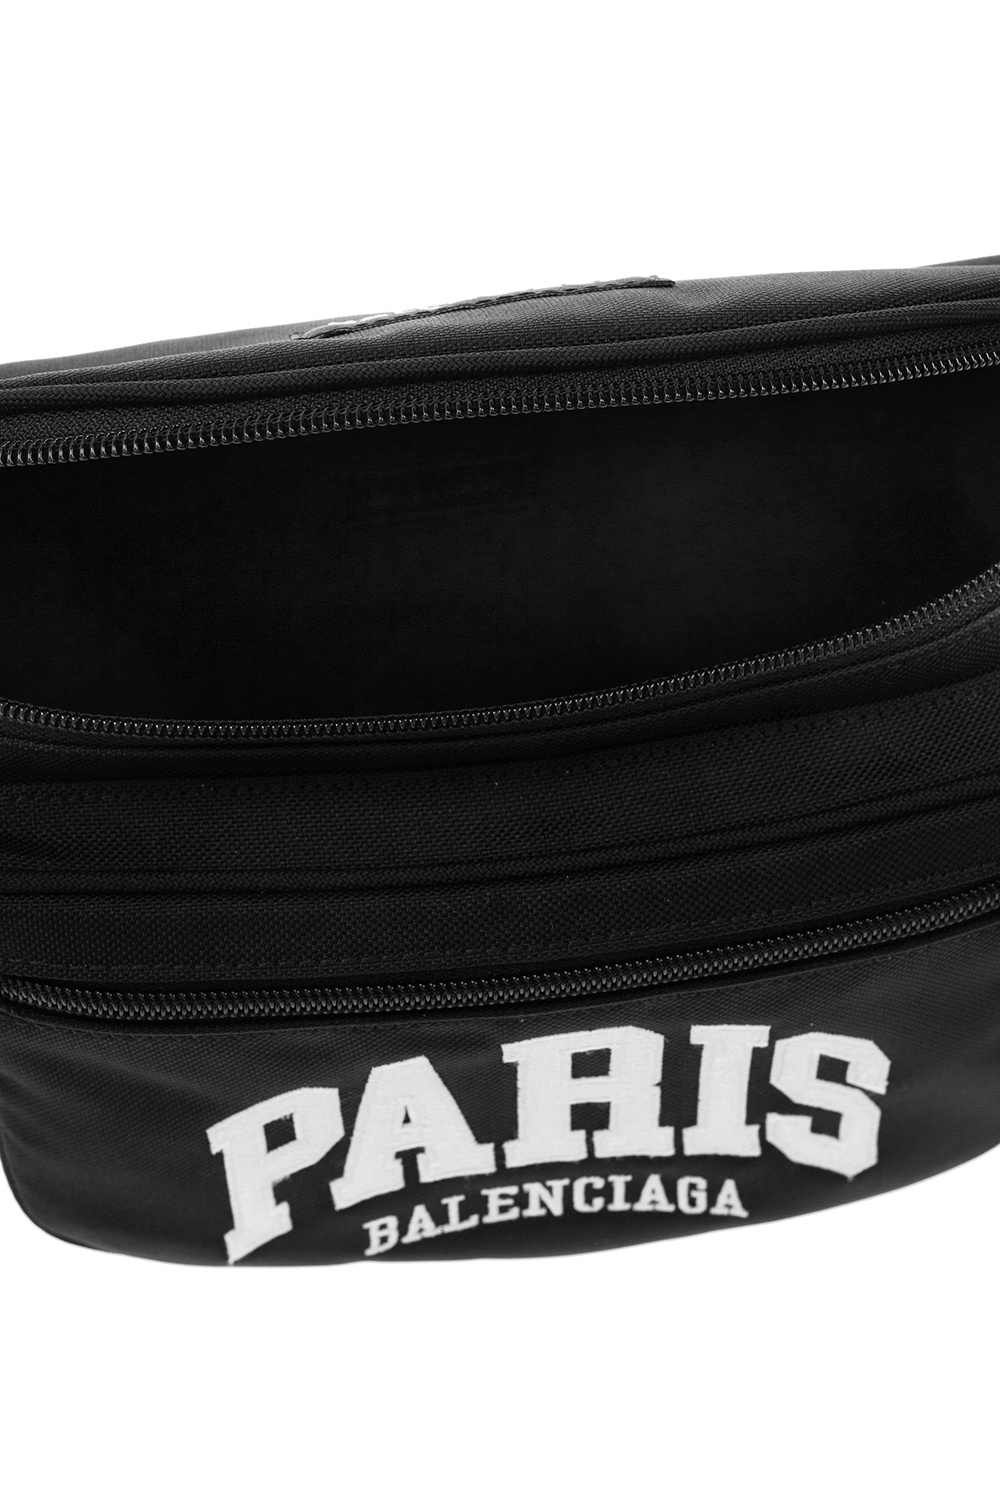 Balenciaga 'Cities Paris Explorer' belt bag | Men's Bags | Vitkac